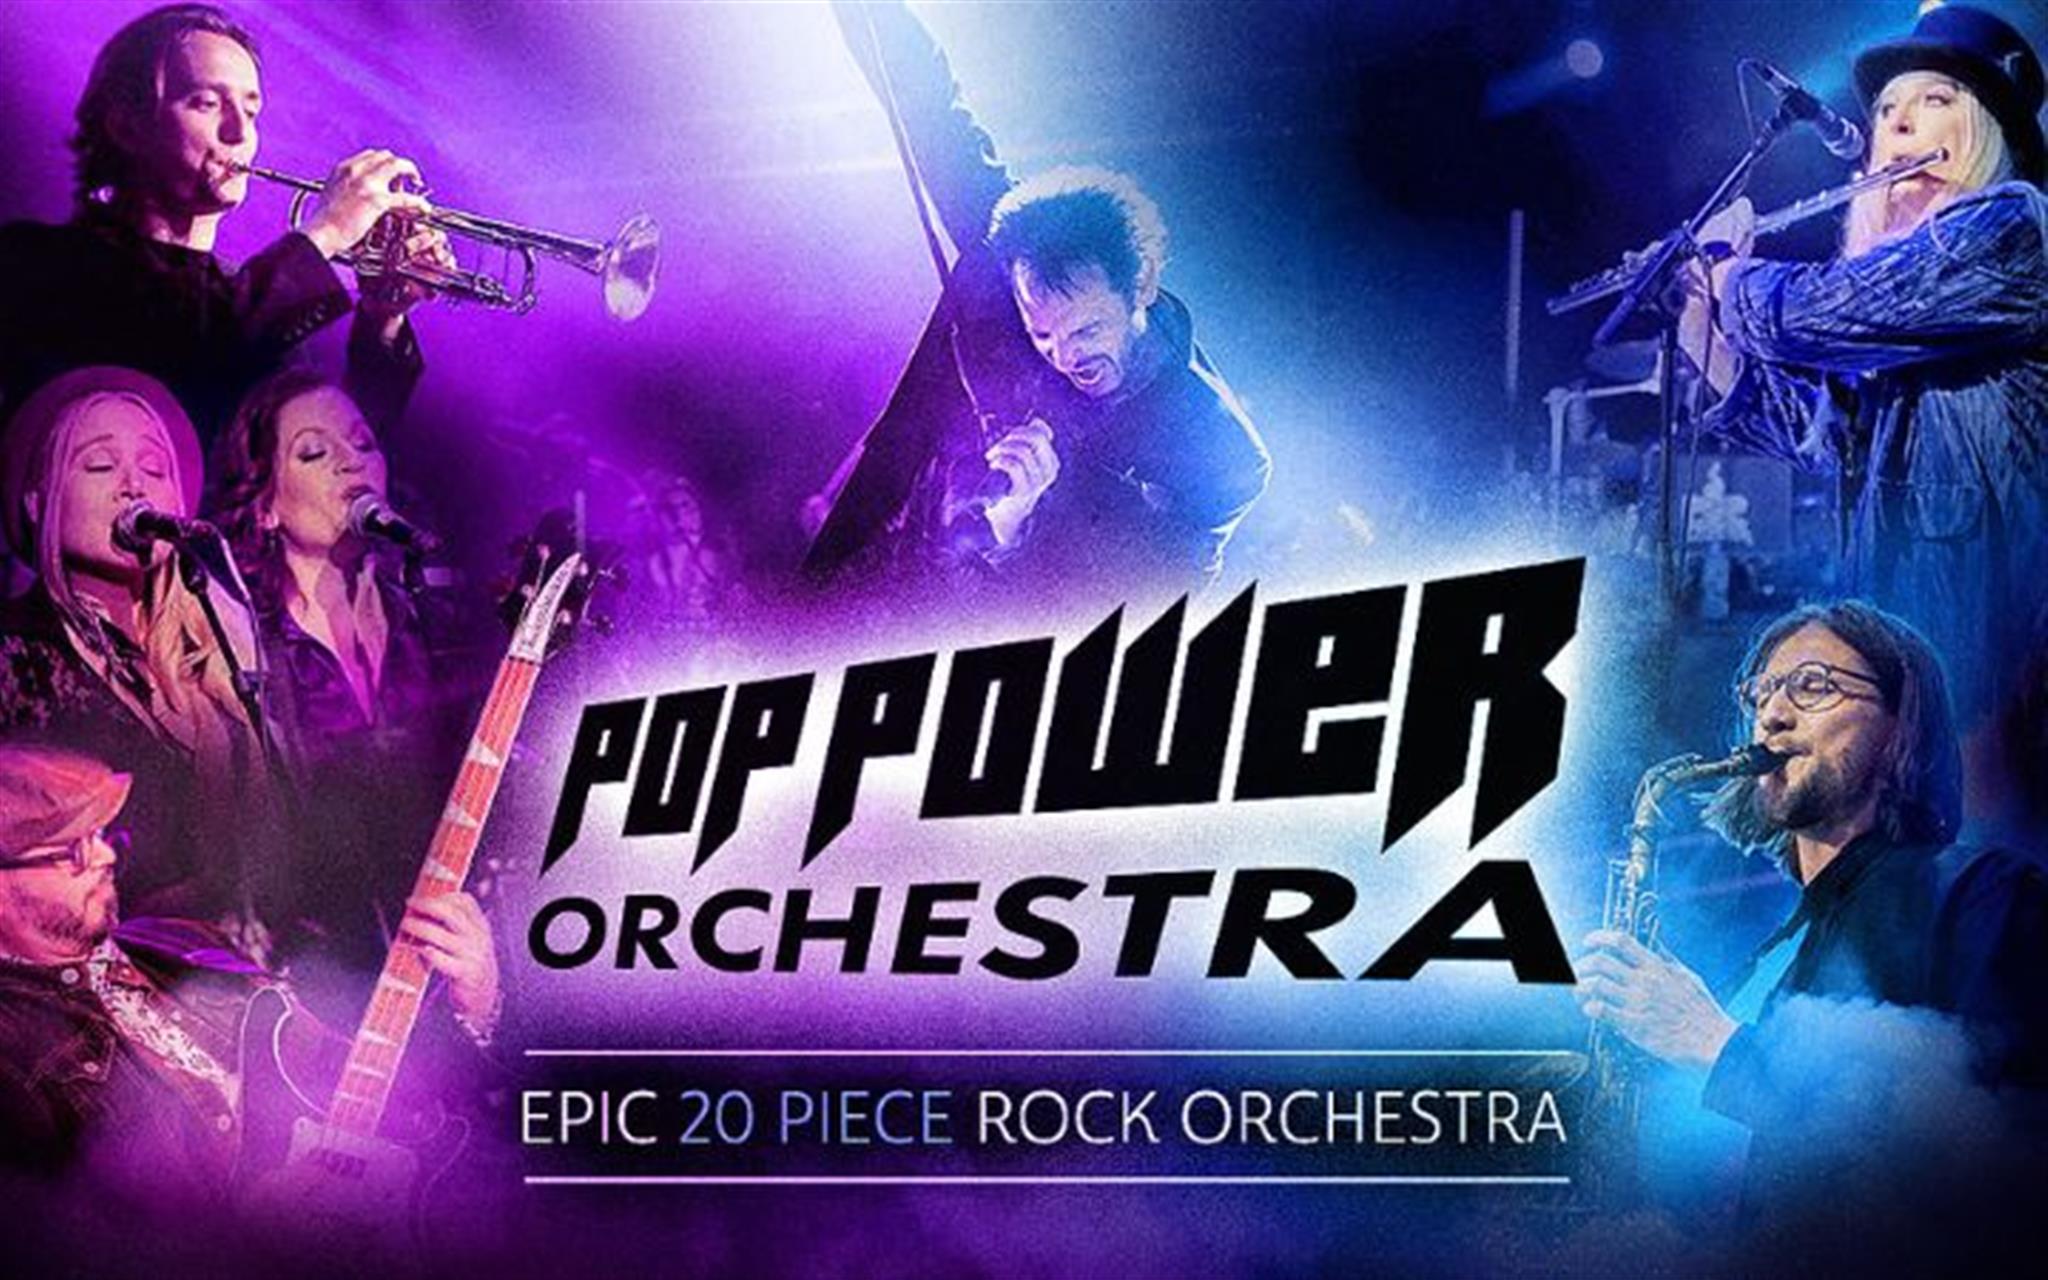 Pop Power Orchestra